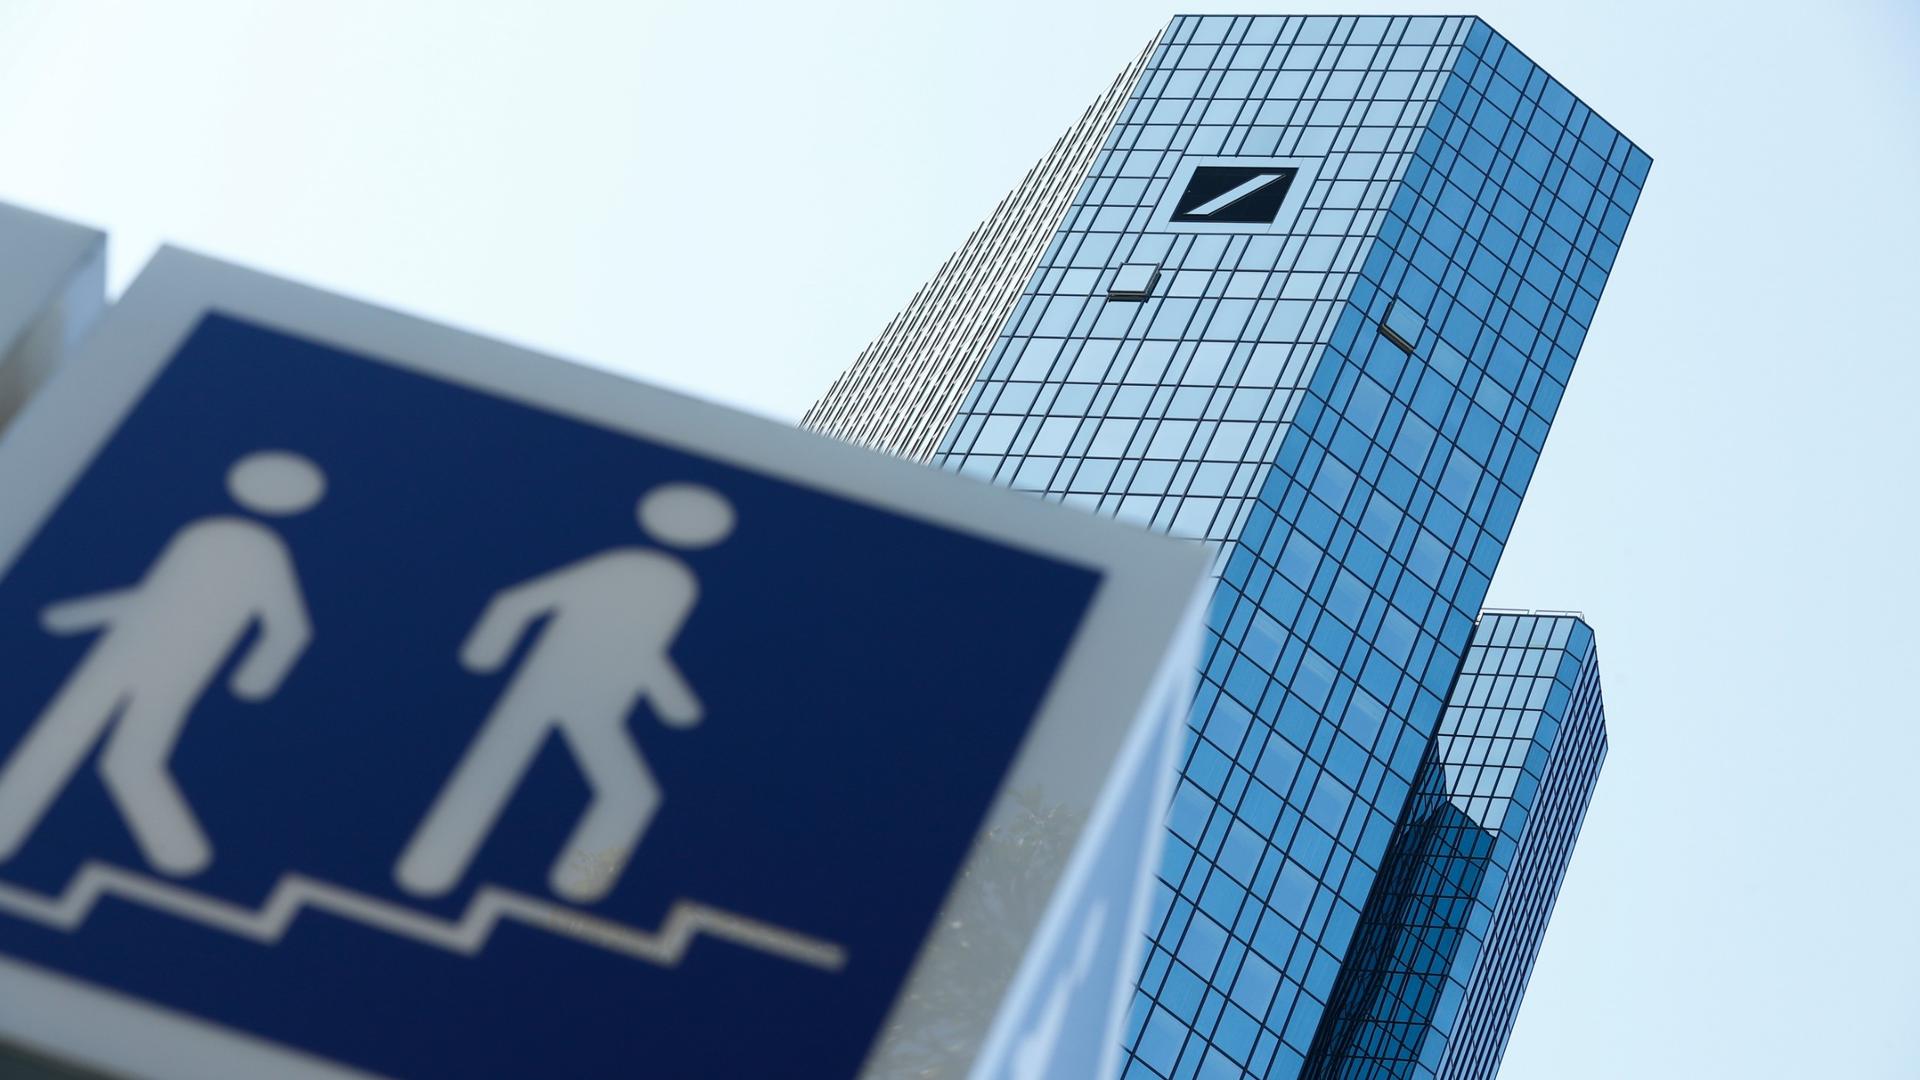 The skyscraper headquarters of Germany's Deutsche Bank are pictured in Frankfurt, Germany, Sept. 21, 2020.